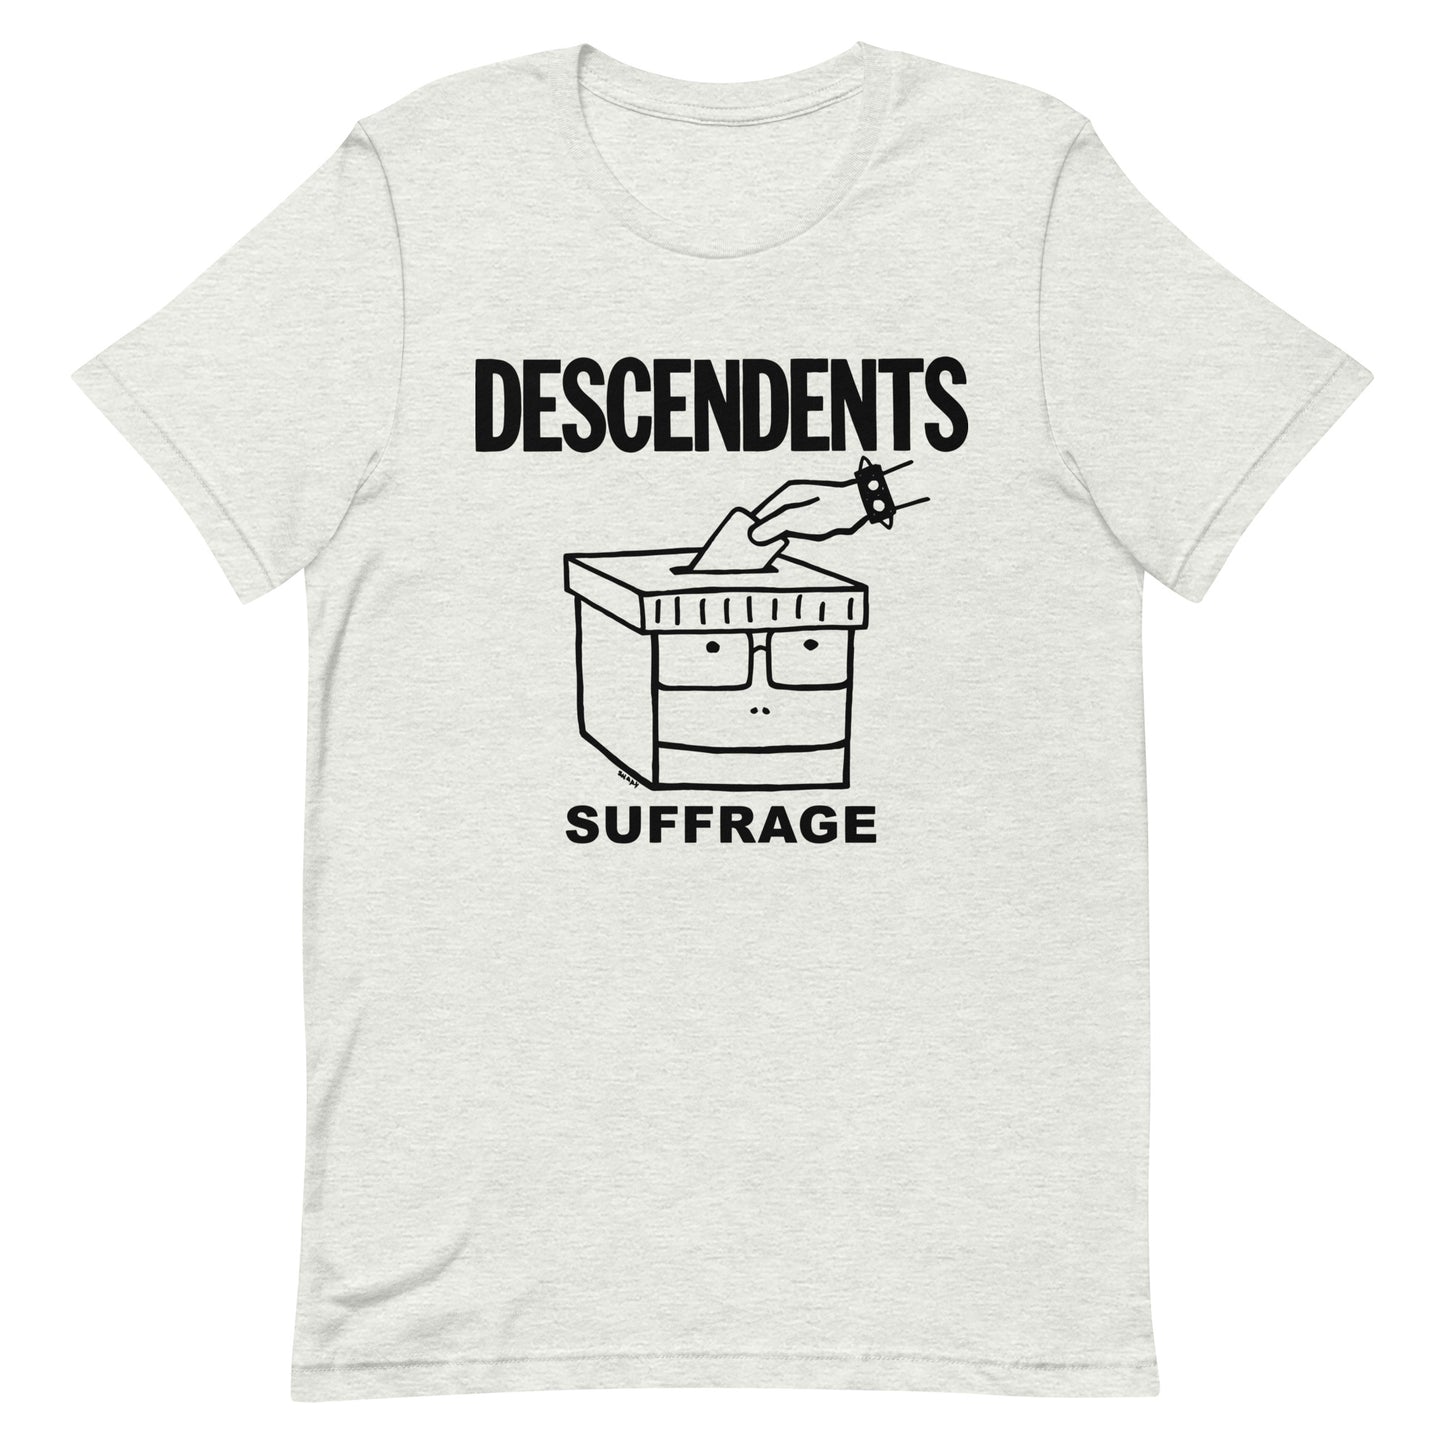 Descendent - Suffrage T-Shirt